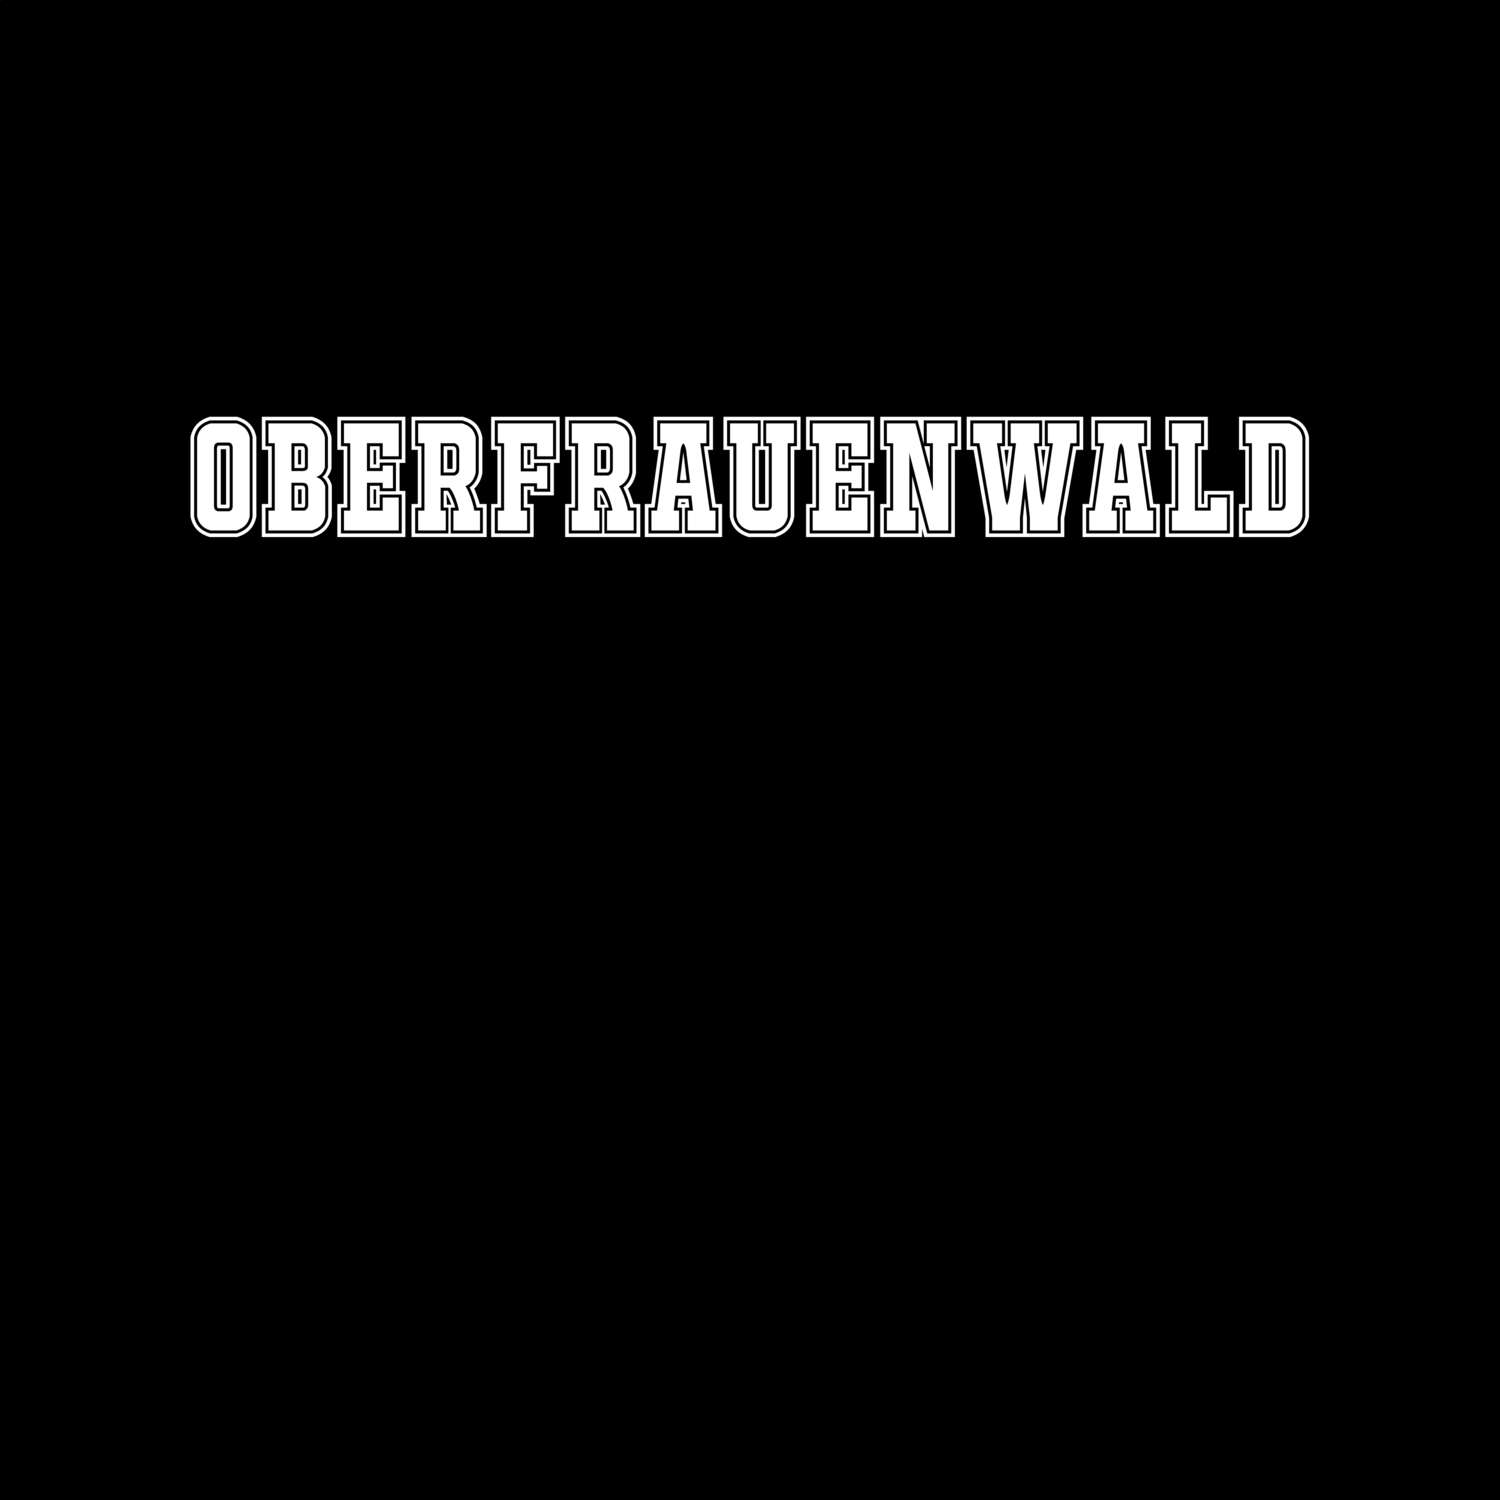 Oberfrauenwald T-Shirt »Classic«